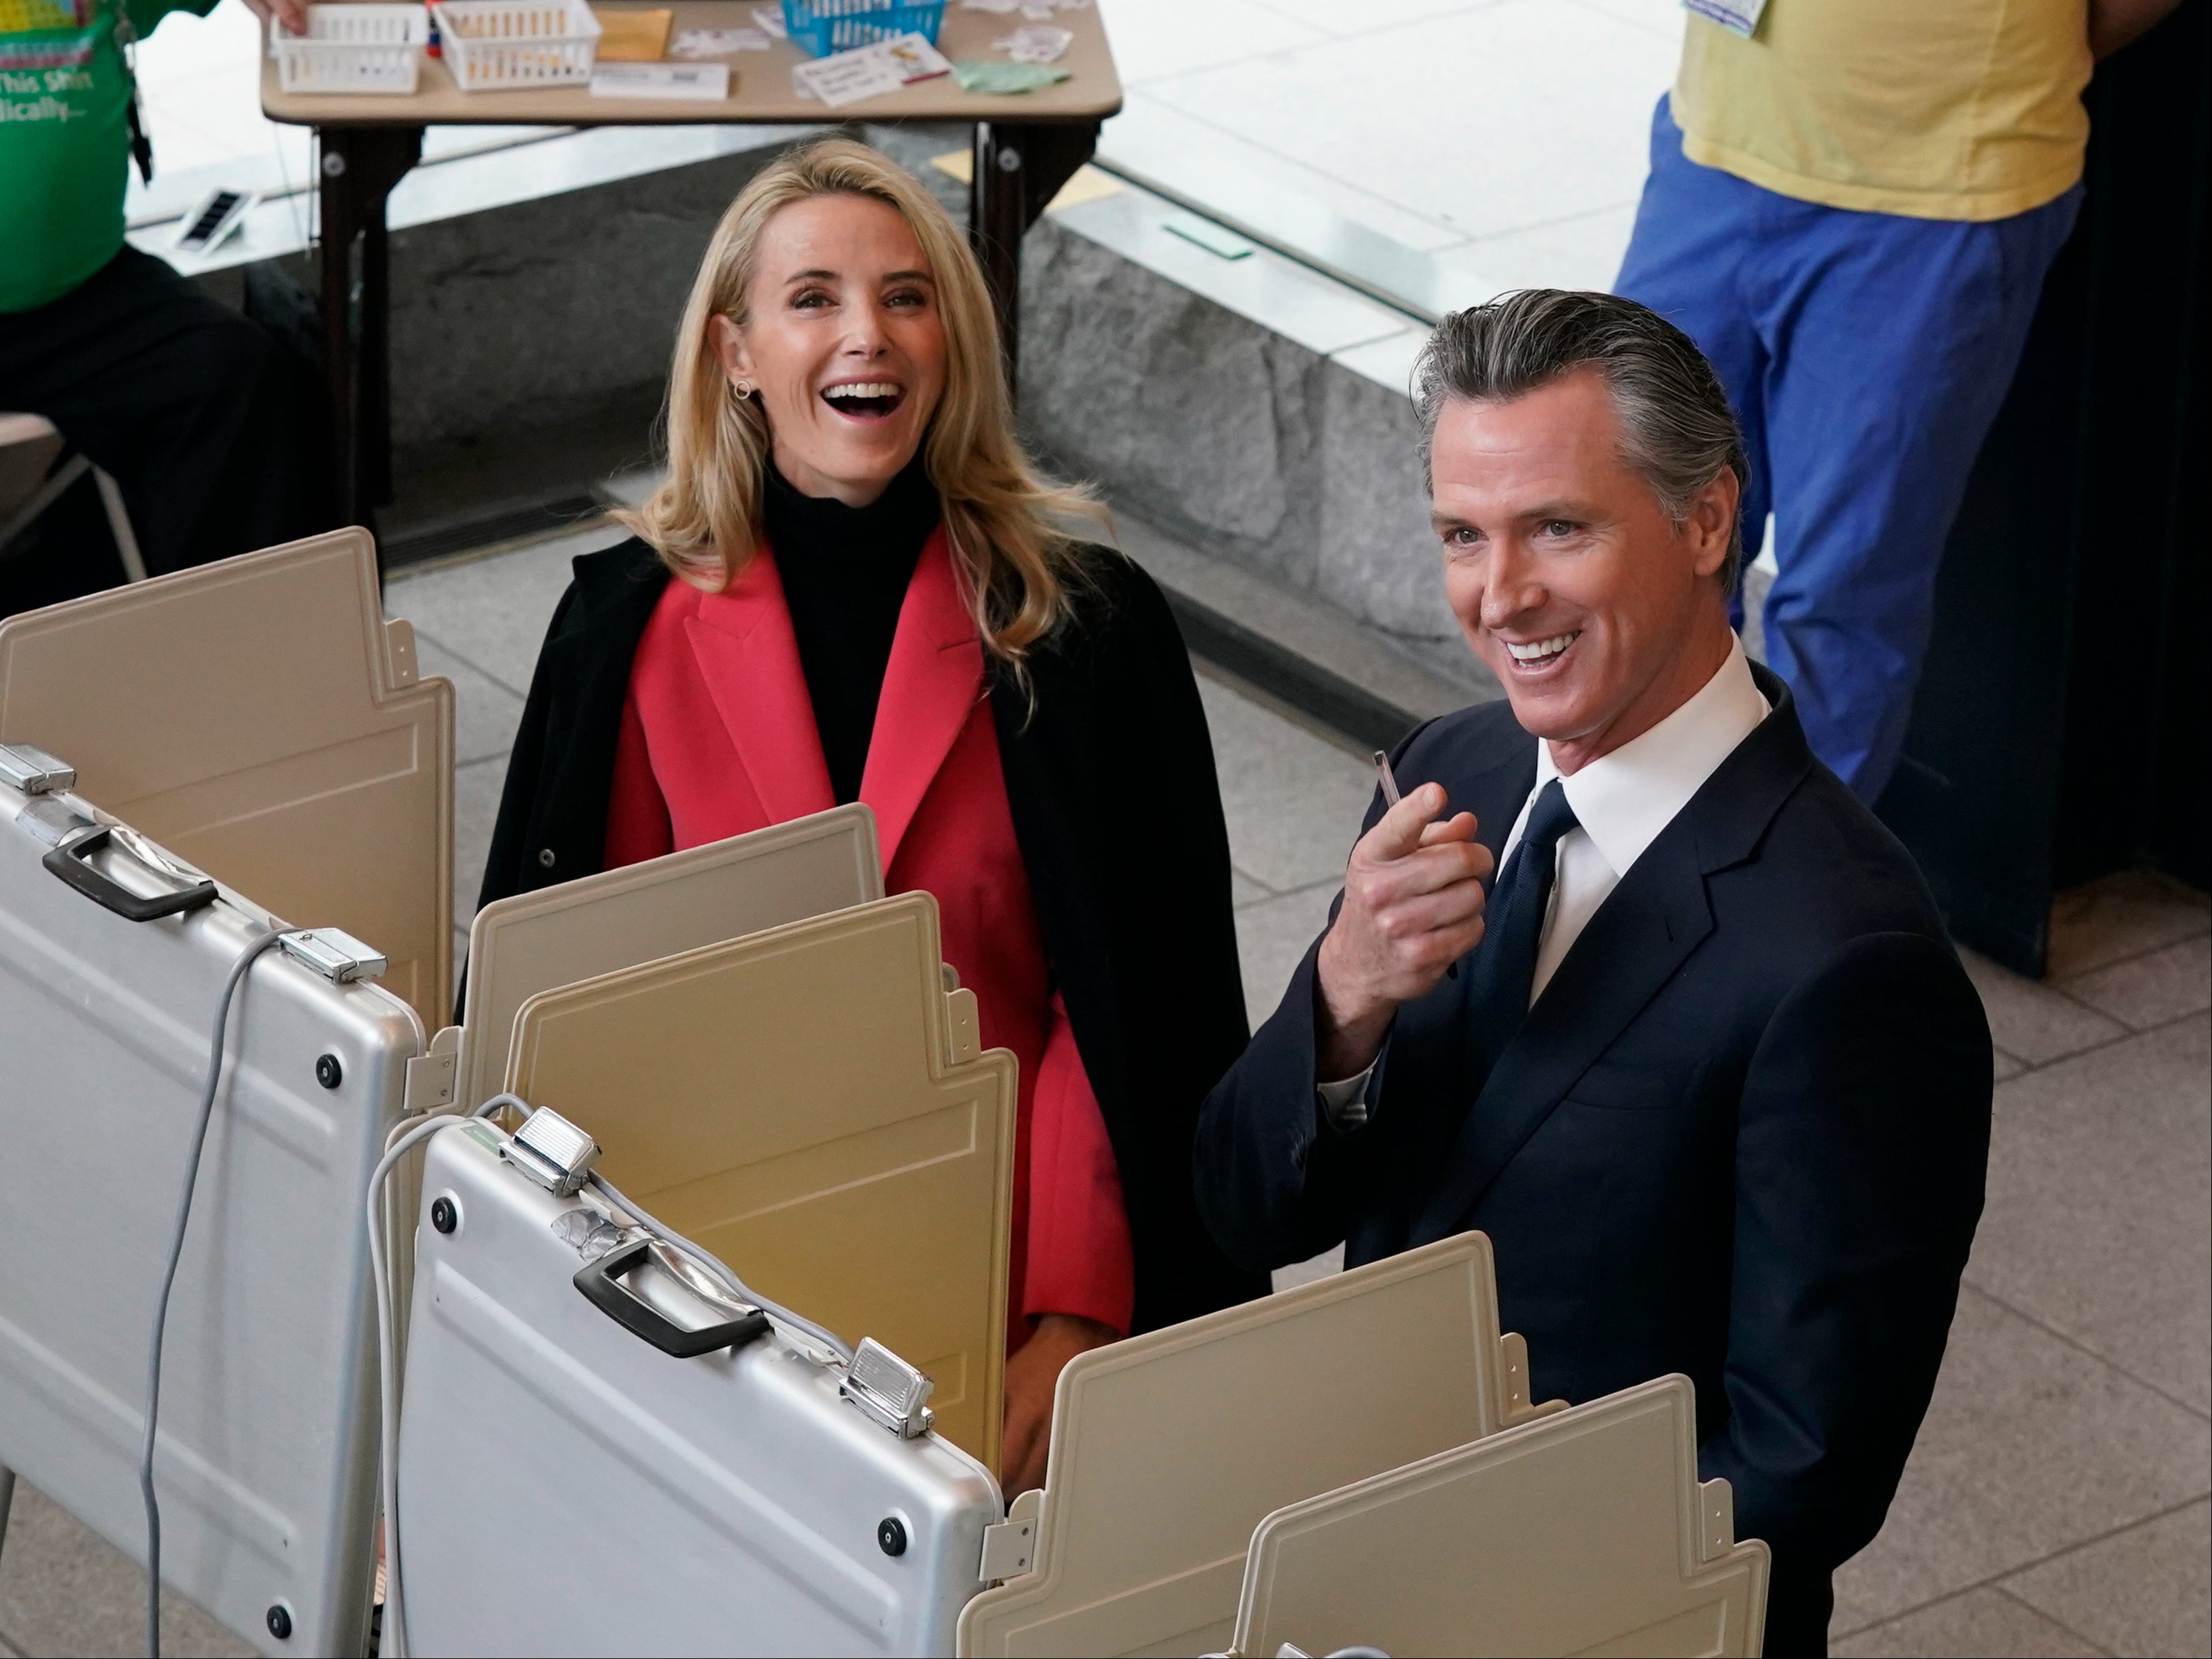 Jennifer Siebel Newsom and her husband Gavin Newsom pause as they spot photographers while voting in Sacramento on 8 November 2022